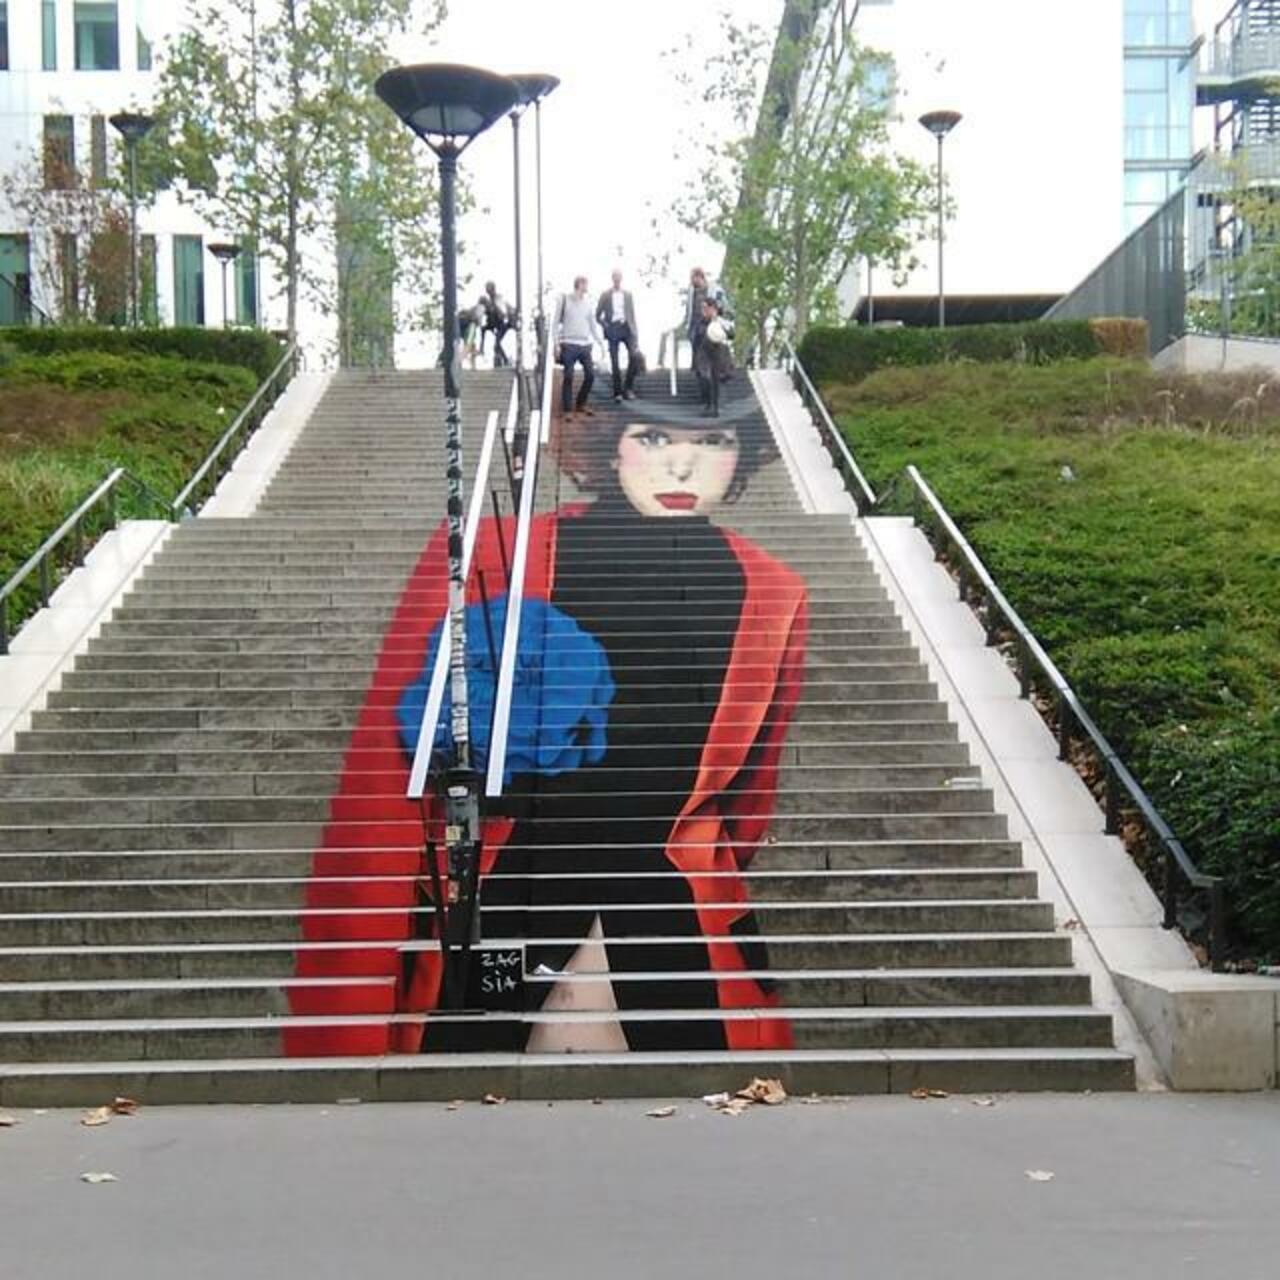 #Paris #graffiti photo by @streetarttourparis http://ift.tt/1N4aDtv #StreetArt http://t.co/PrRgAd6TYz